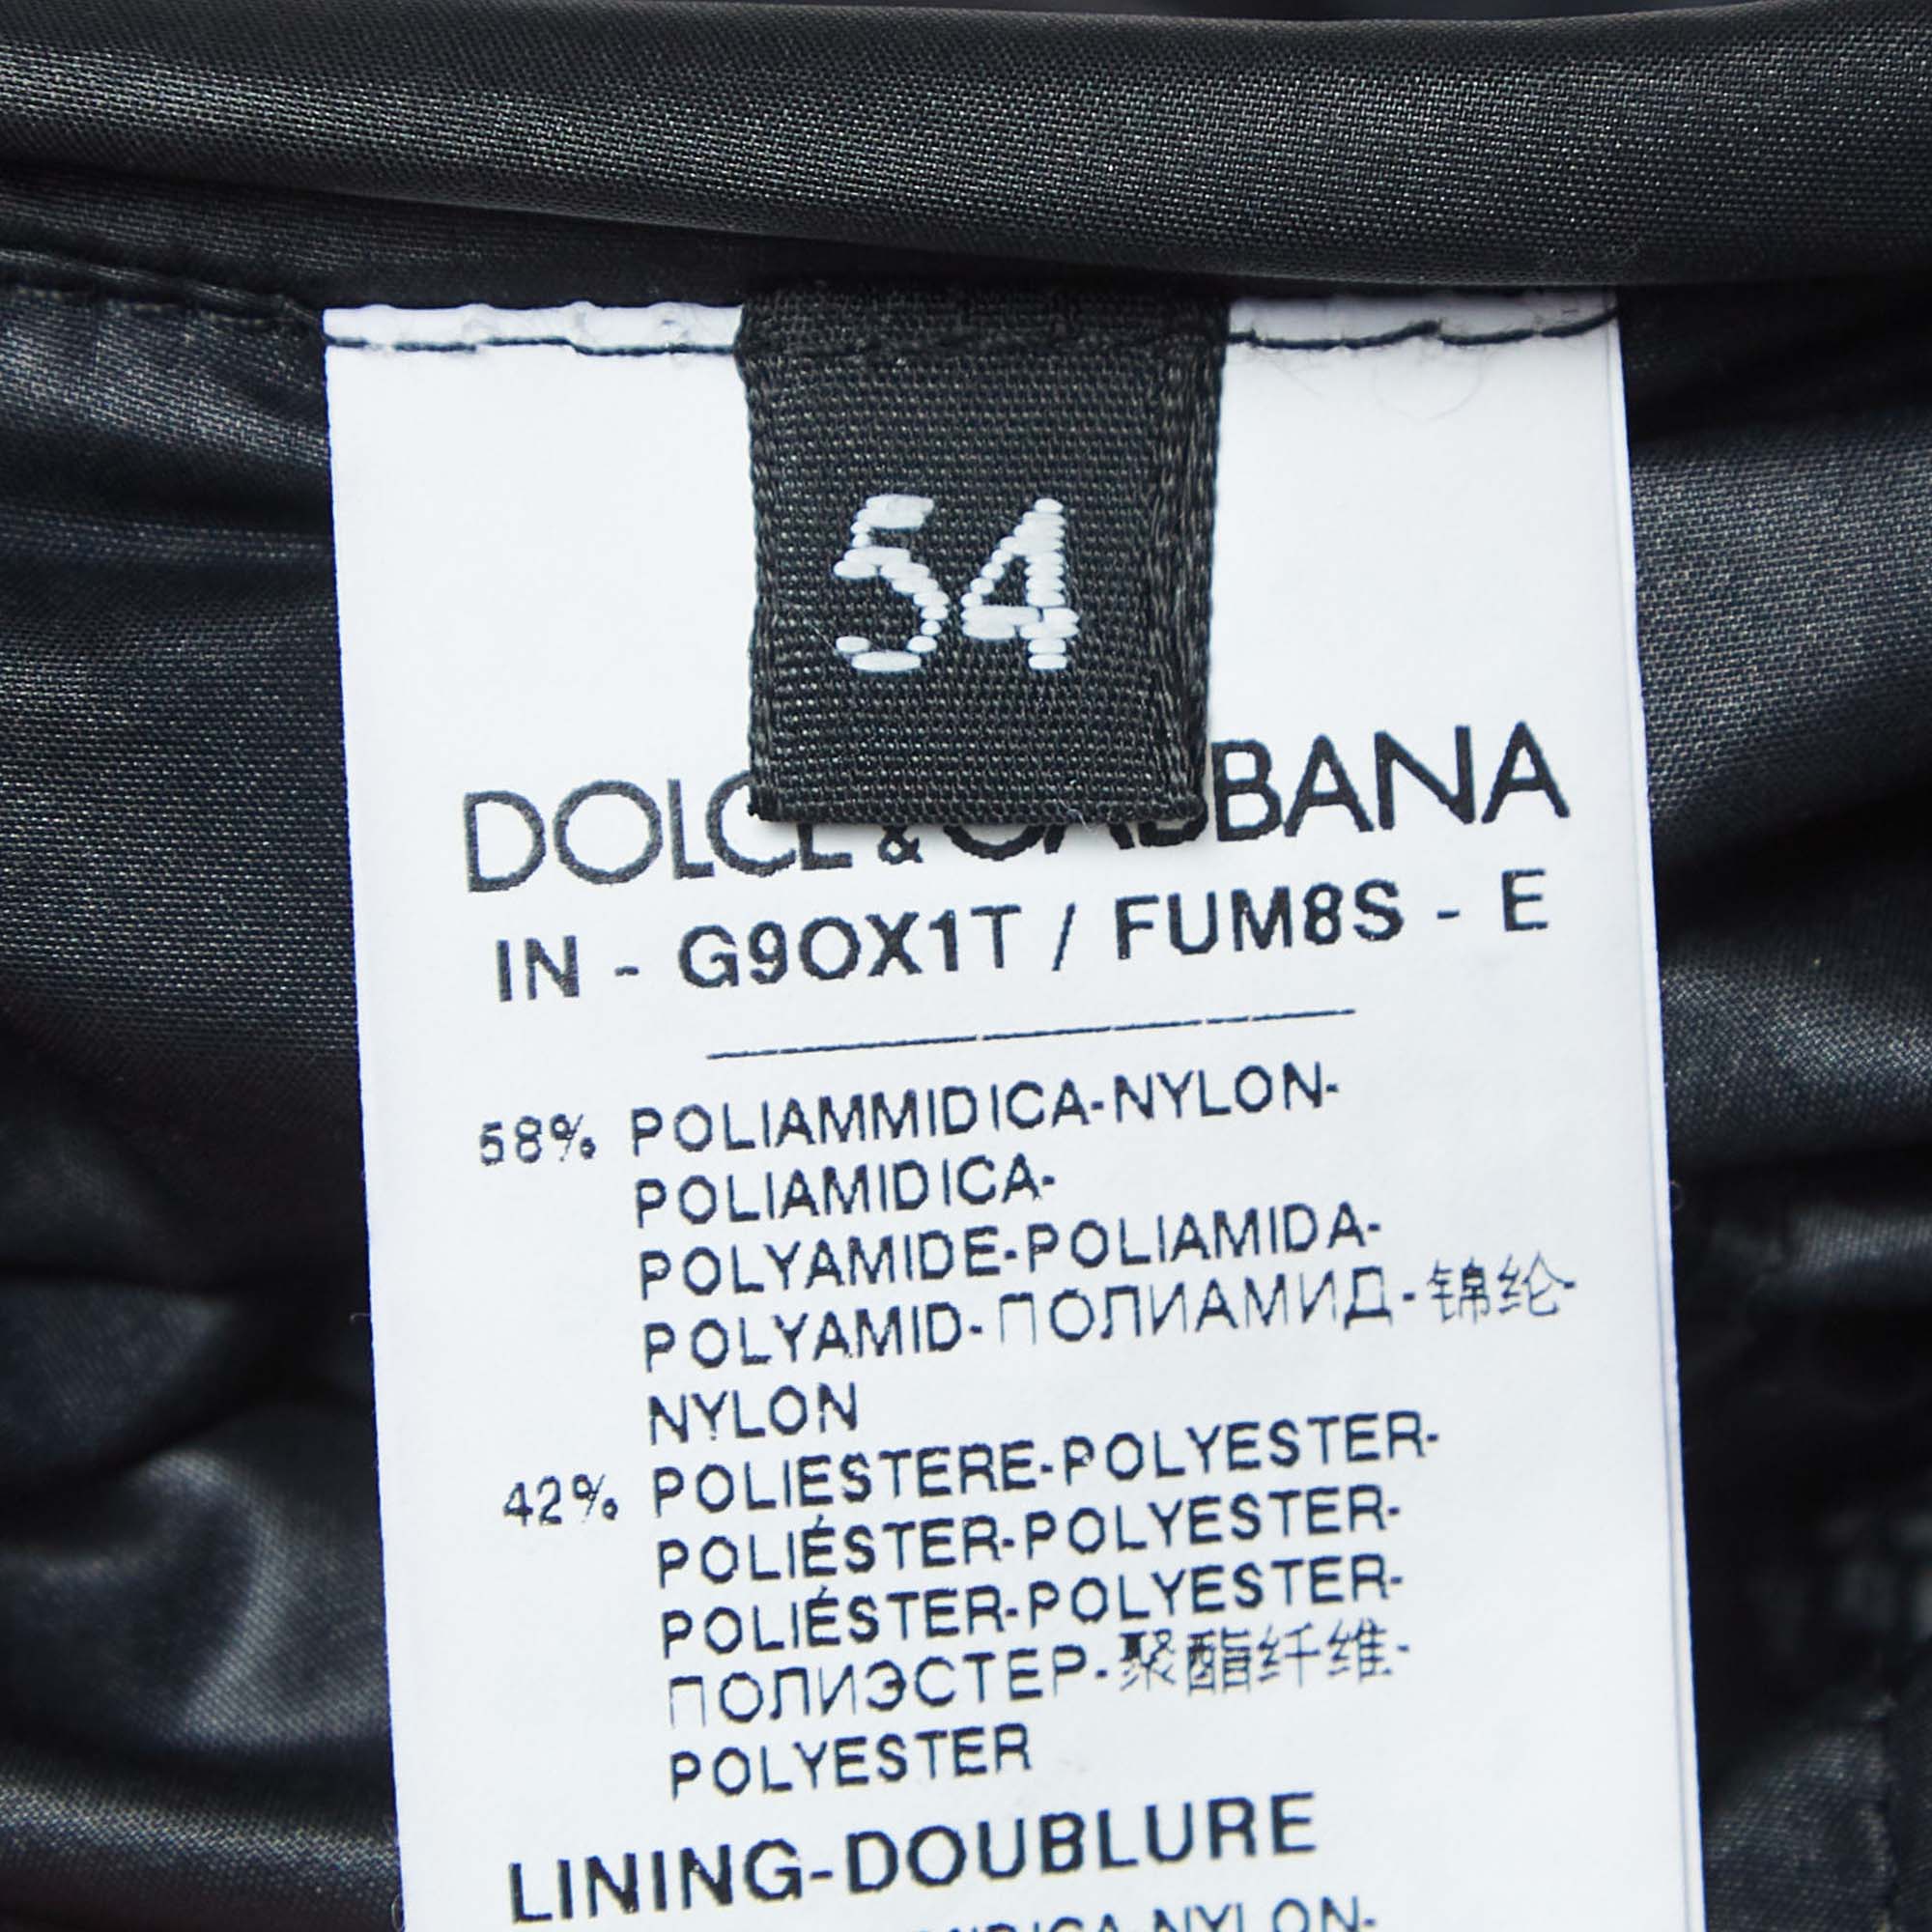 Dolce & Gabbana Navy Blue Quilted Nylon Blend Zip Front Down Jacket XXL